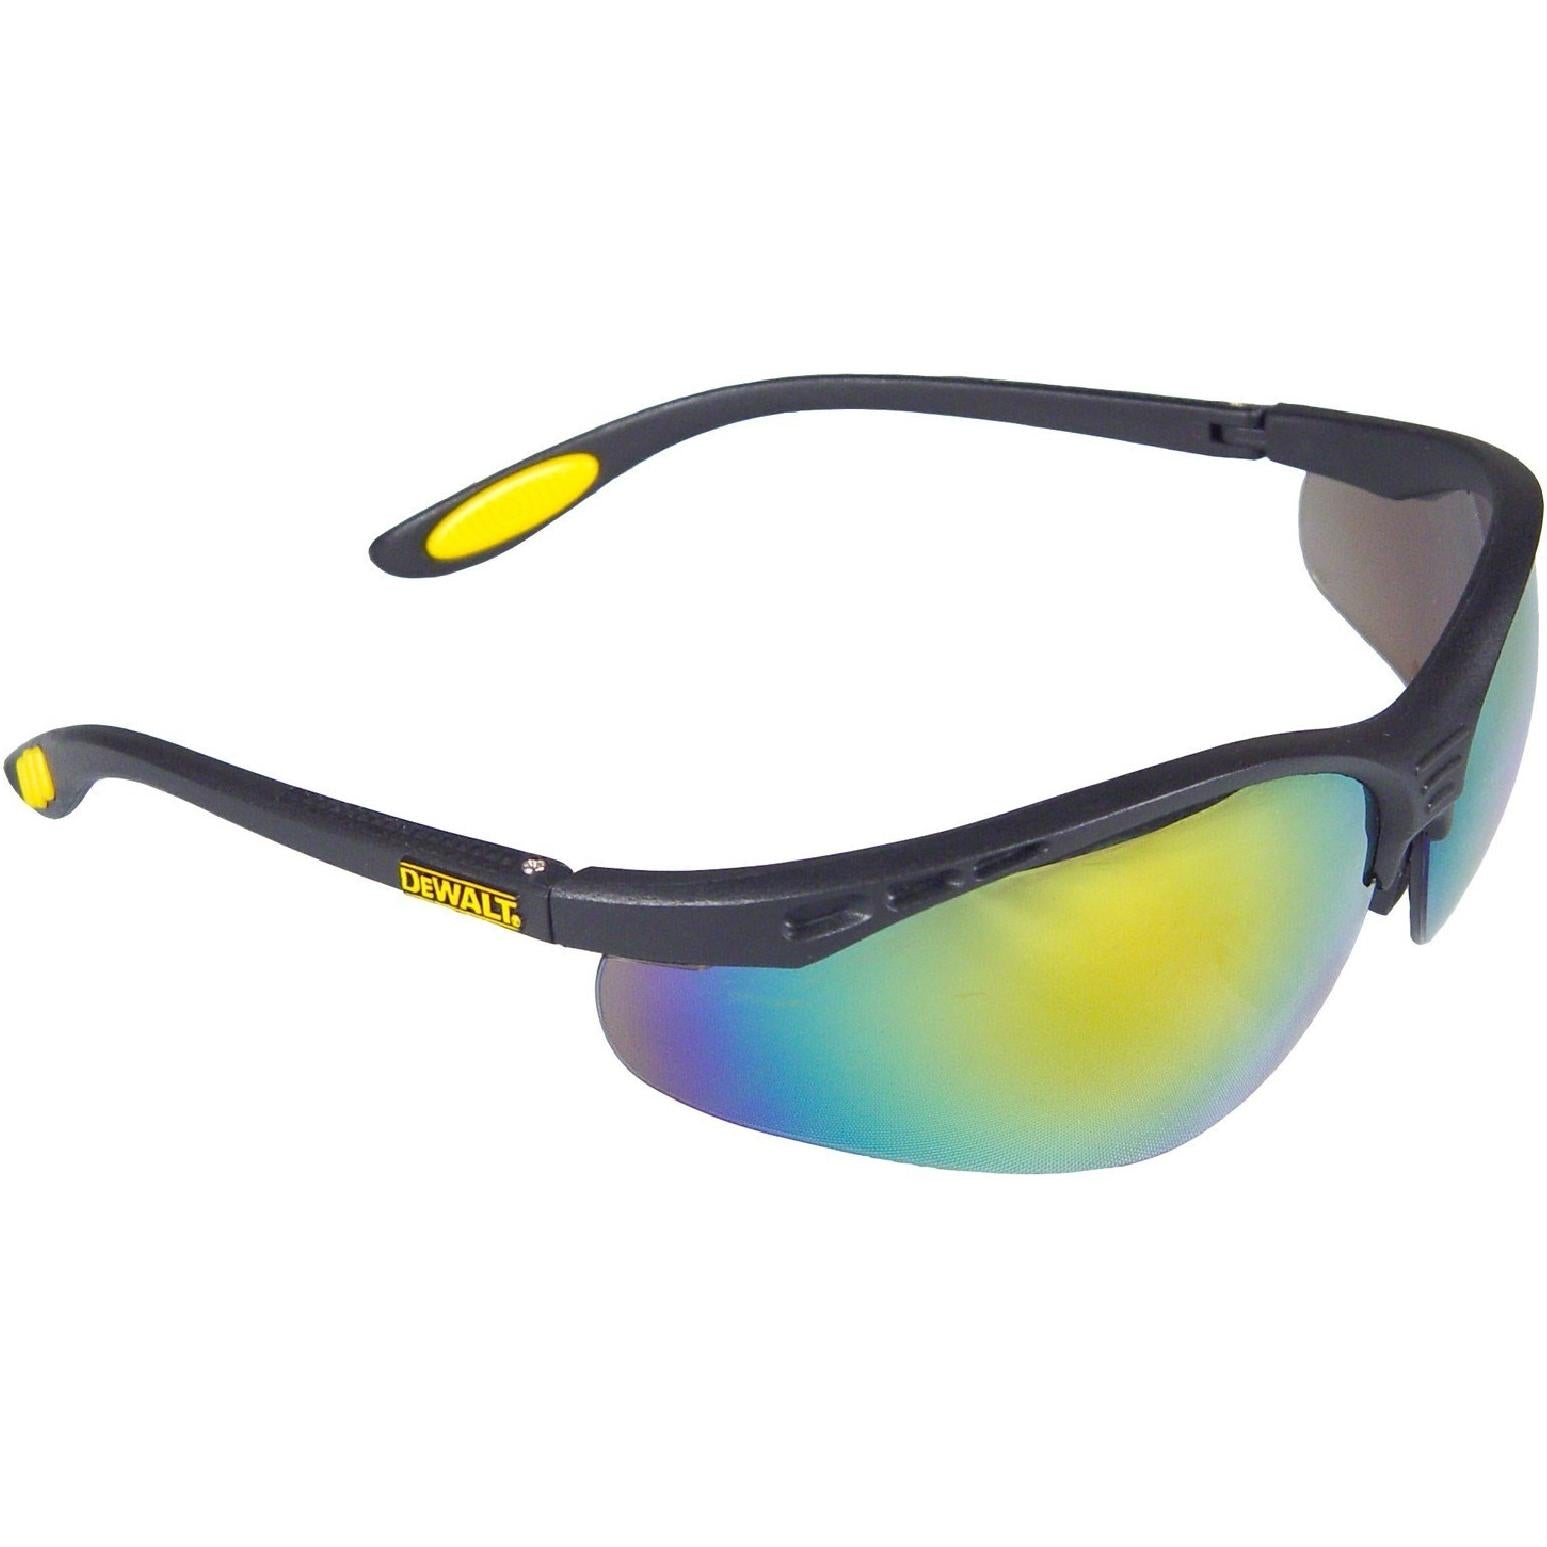 Dewalt Reinforcer DPG58 Safety Eyewear